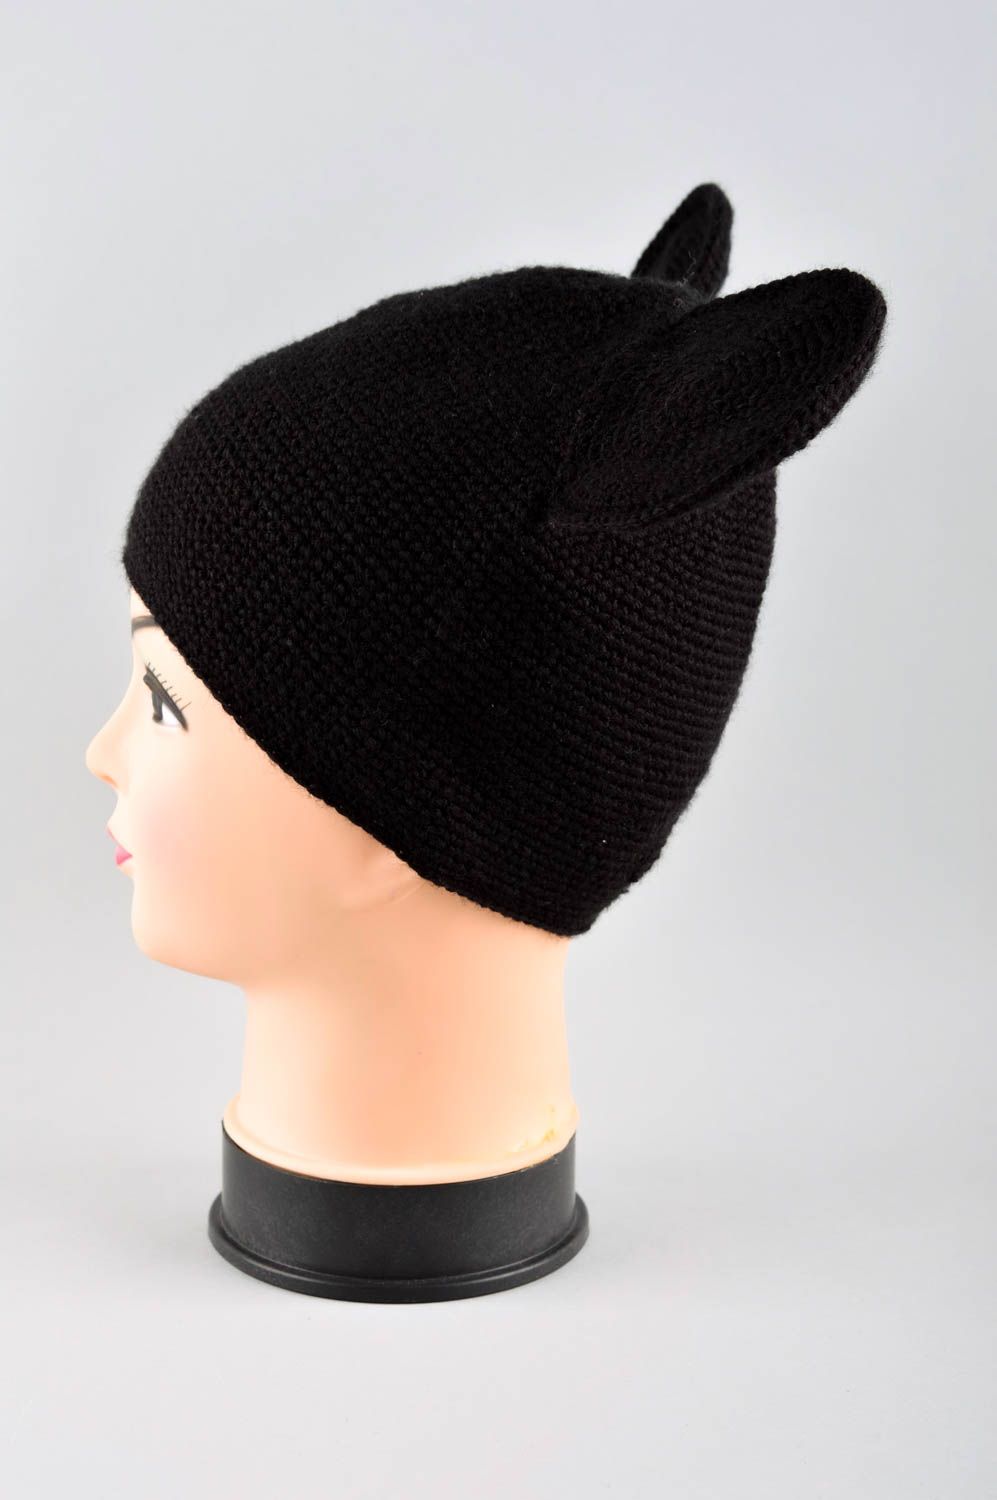 Handmade beautiful cap unusual winter black cap stylish warm accessory photo 5